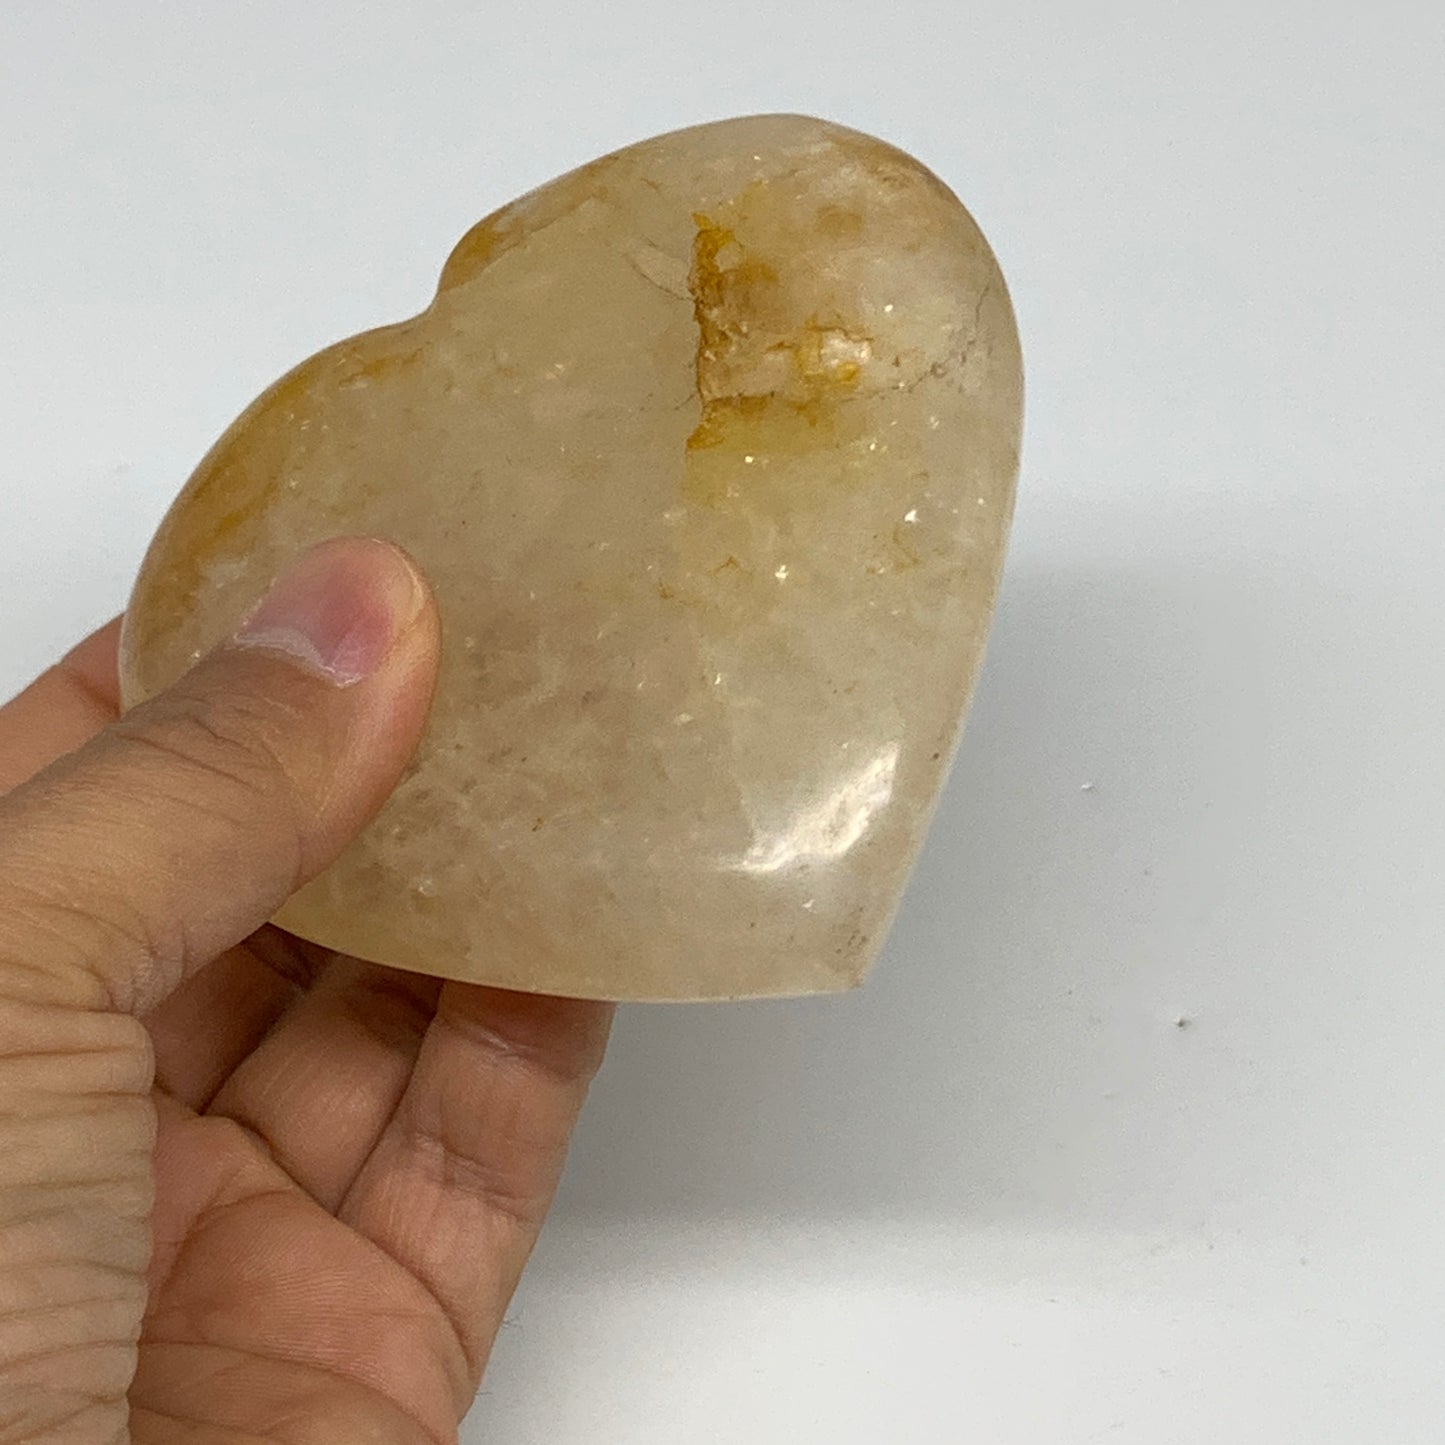 273.2g, 3.4"x3.4"x1" Yellow Healing Quartz Heart Crystal @Madagascar, B30563